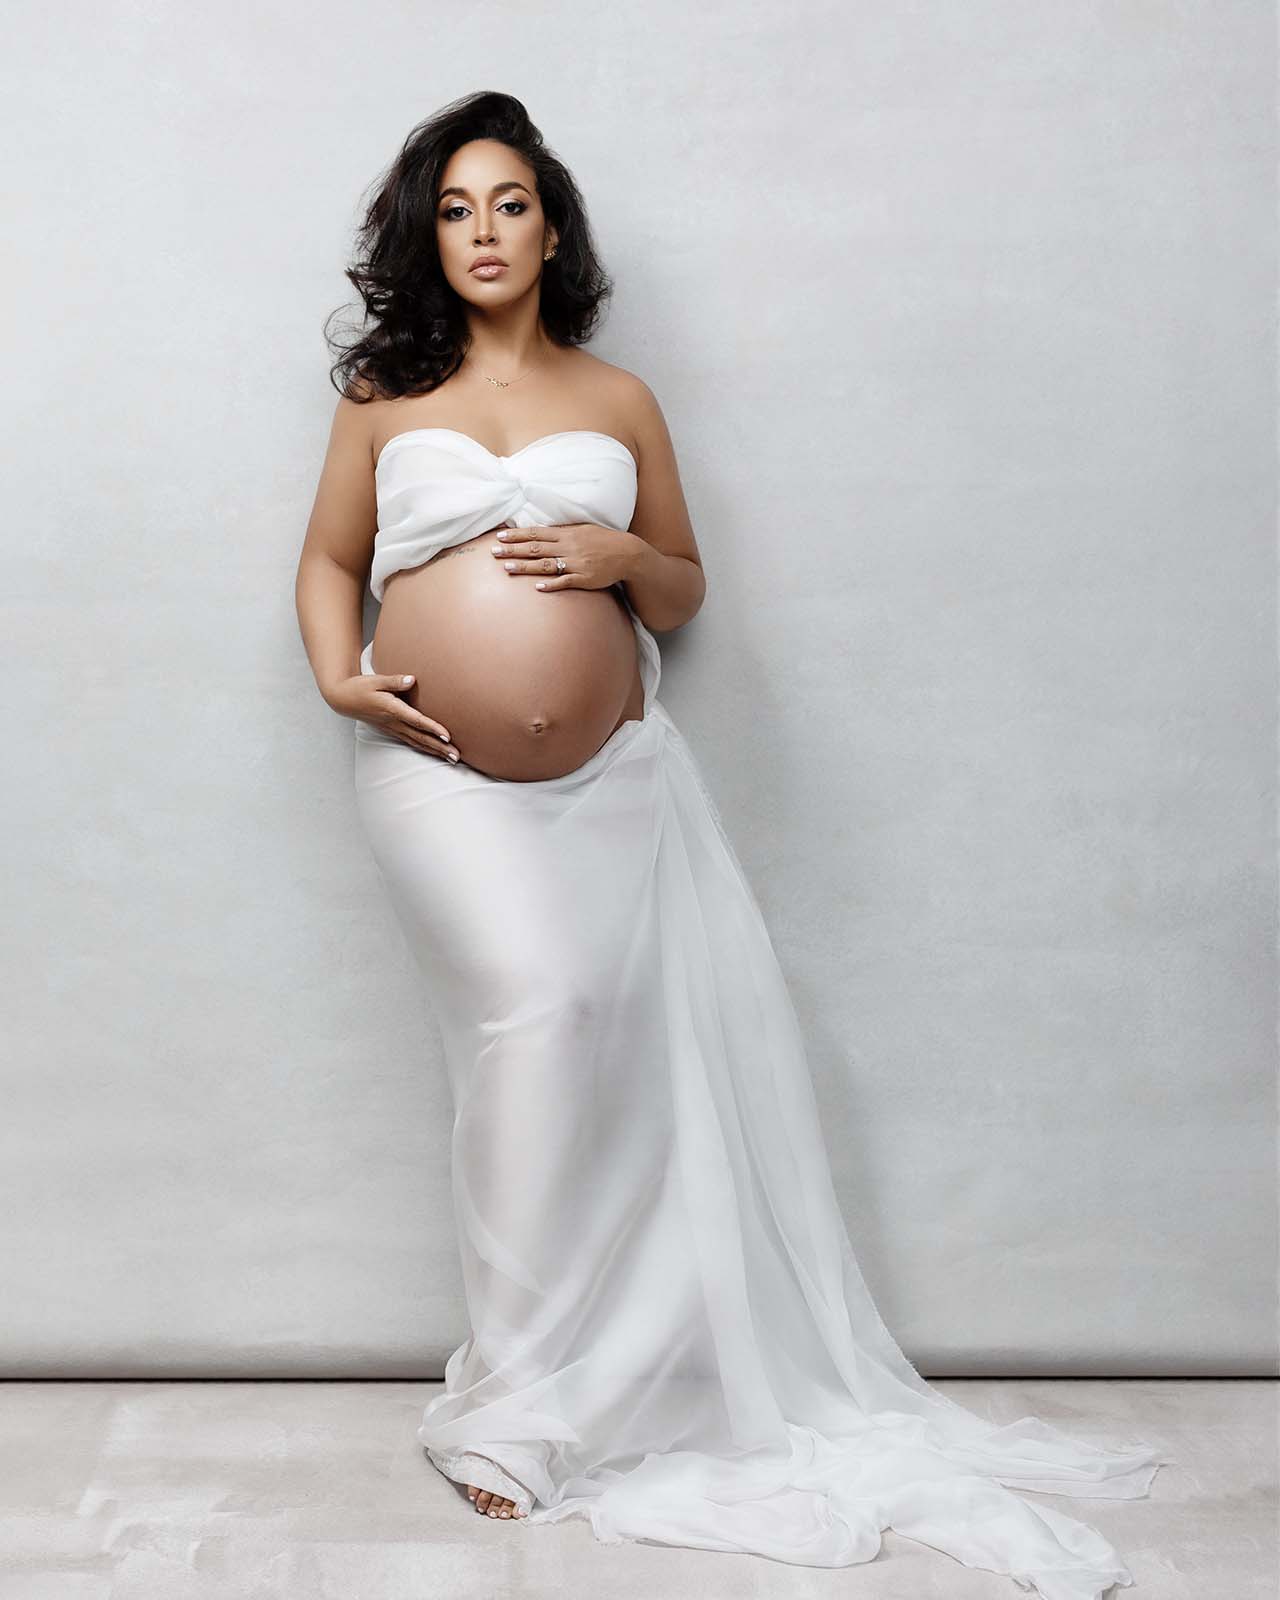 studio maternity photography maryland, baby bump photographer Baltimore, pregnancy photography baltimore